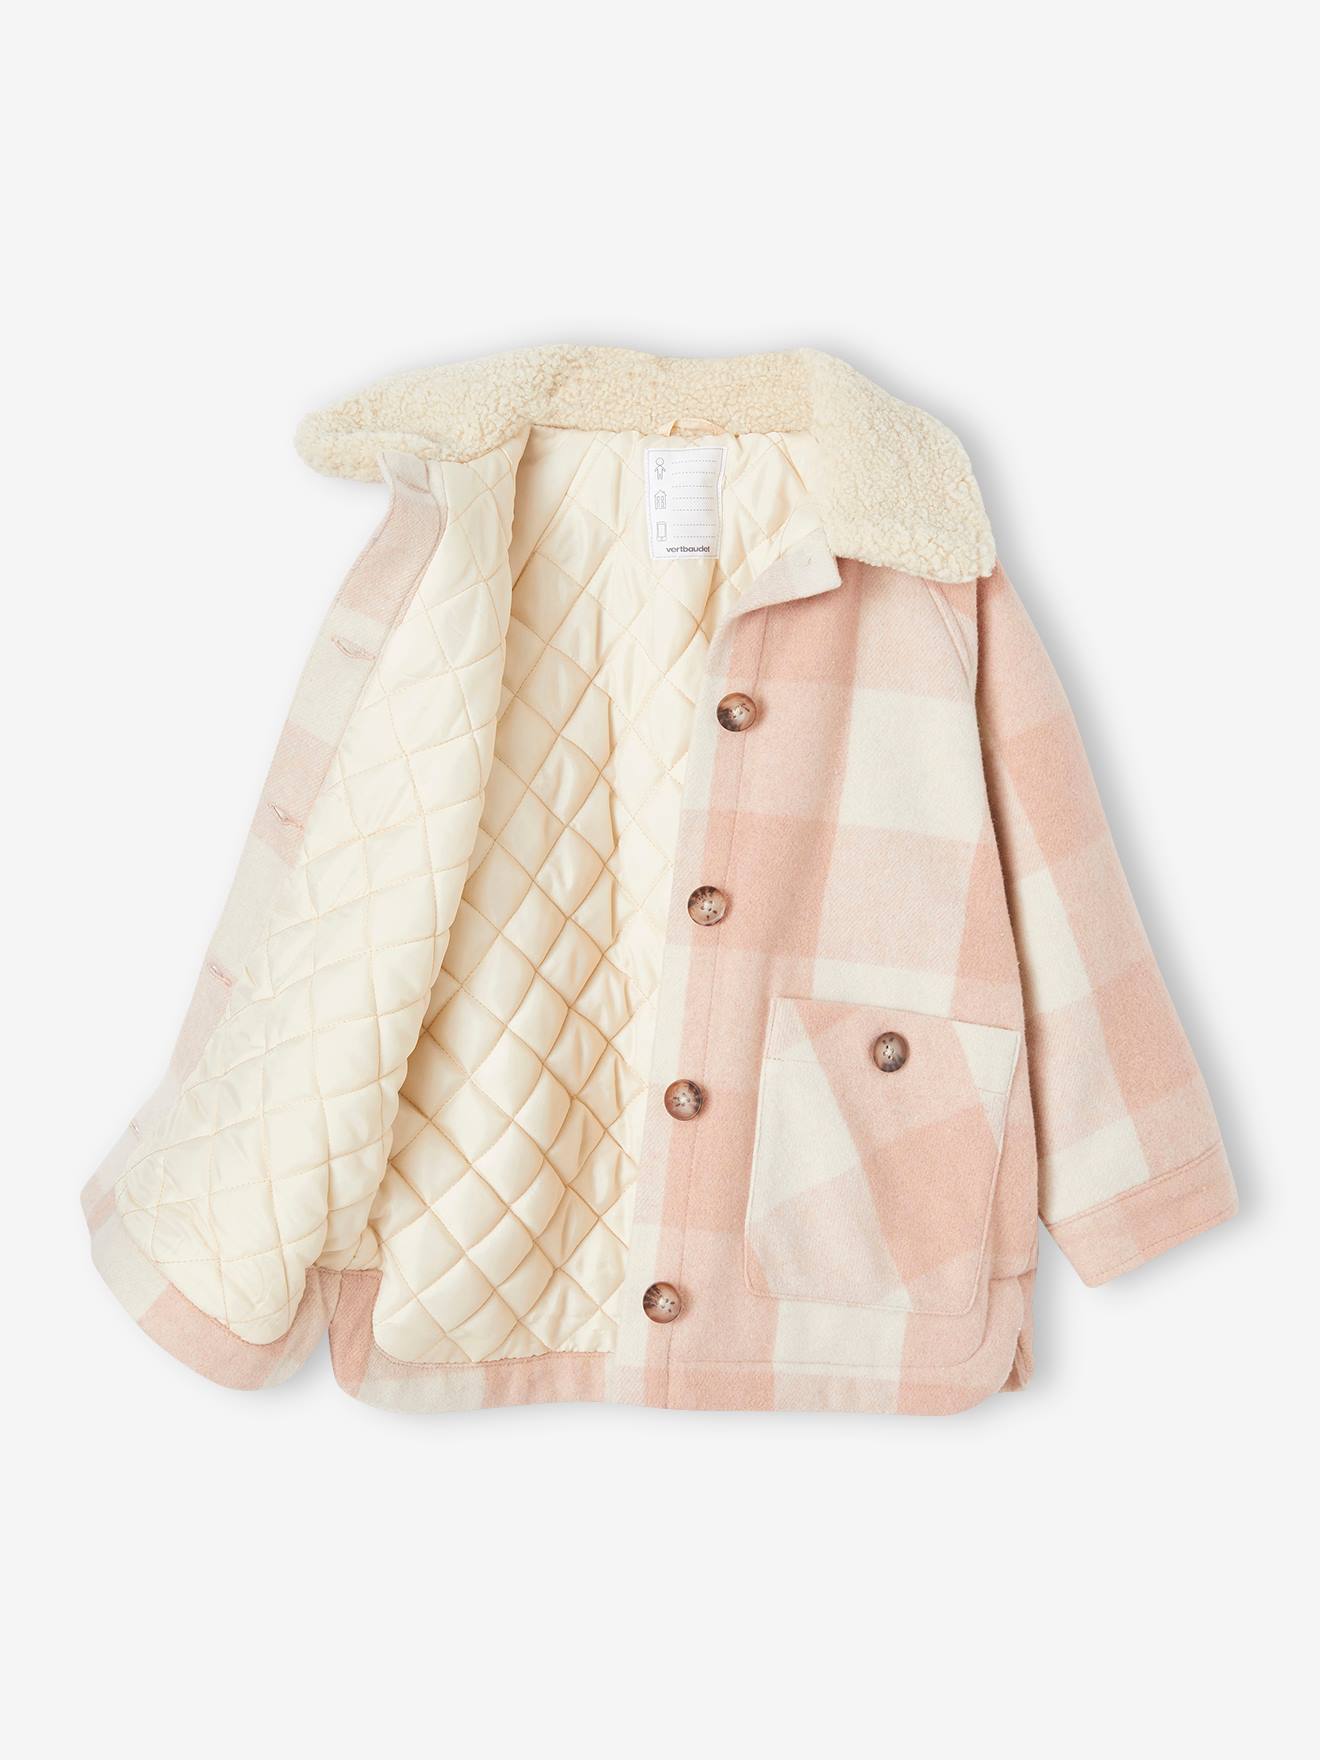 Girls Dress Coat Long Sleeve Button Pocket Long Winter Coat Outerwear 2-14